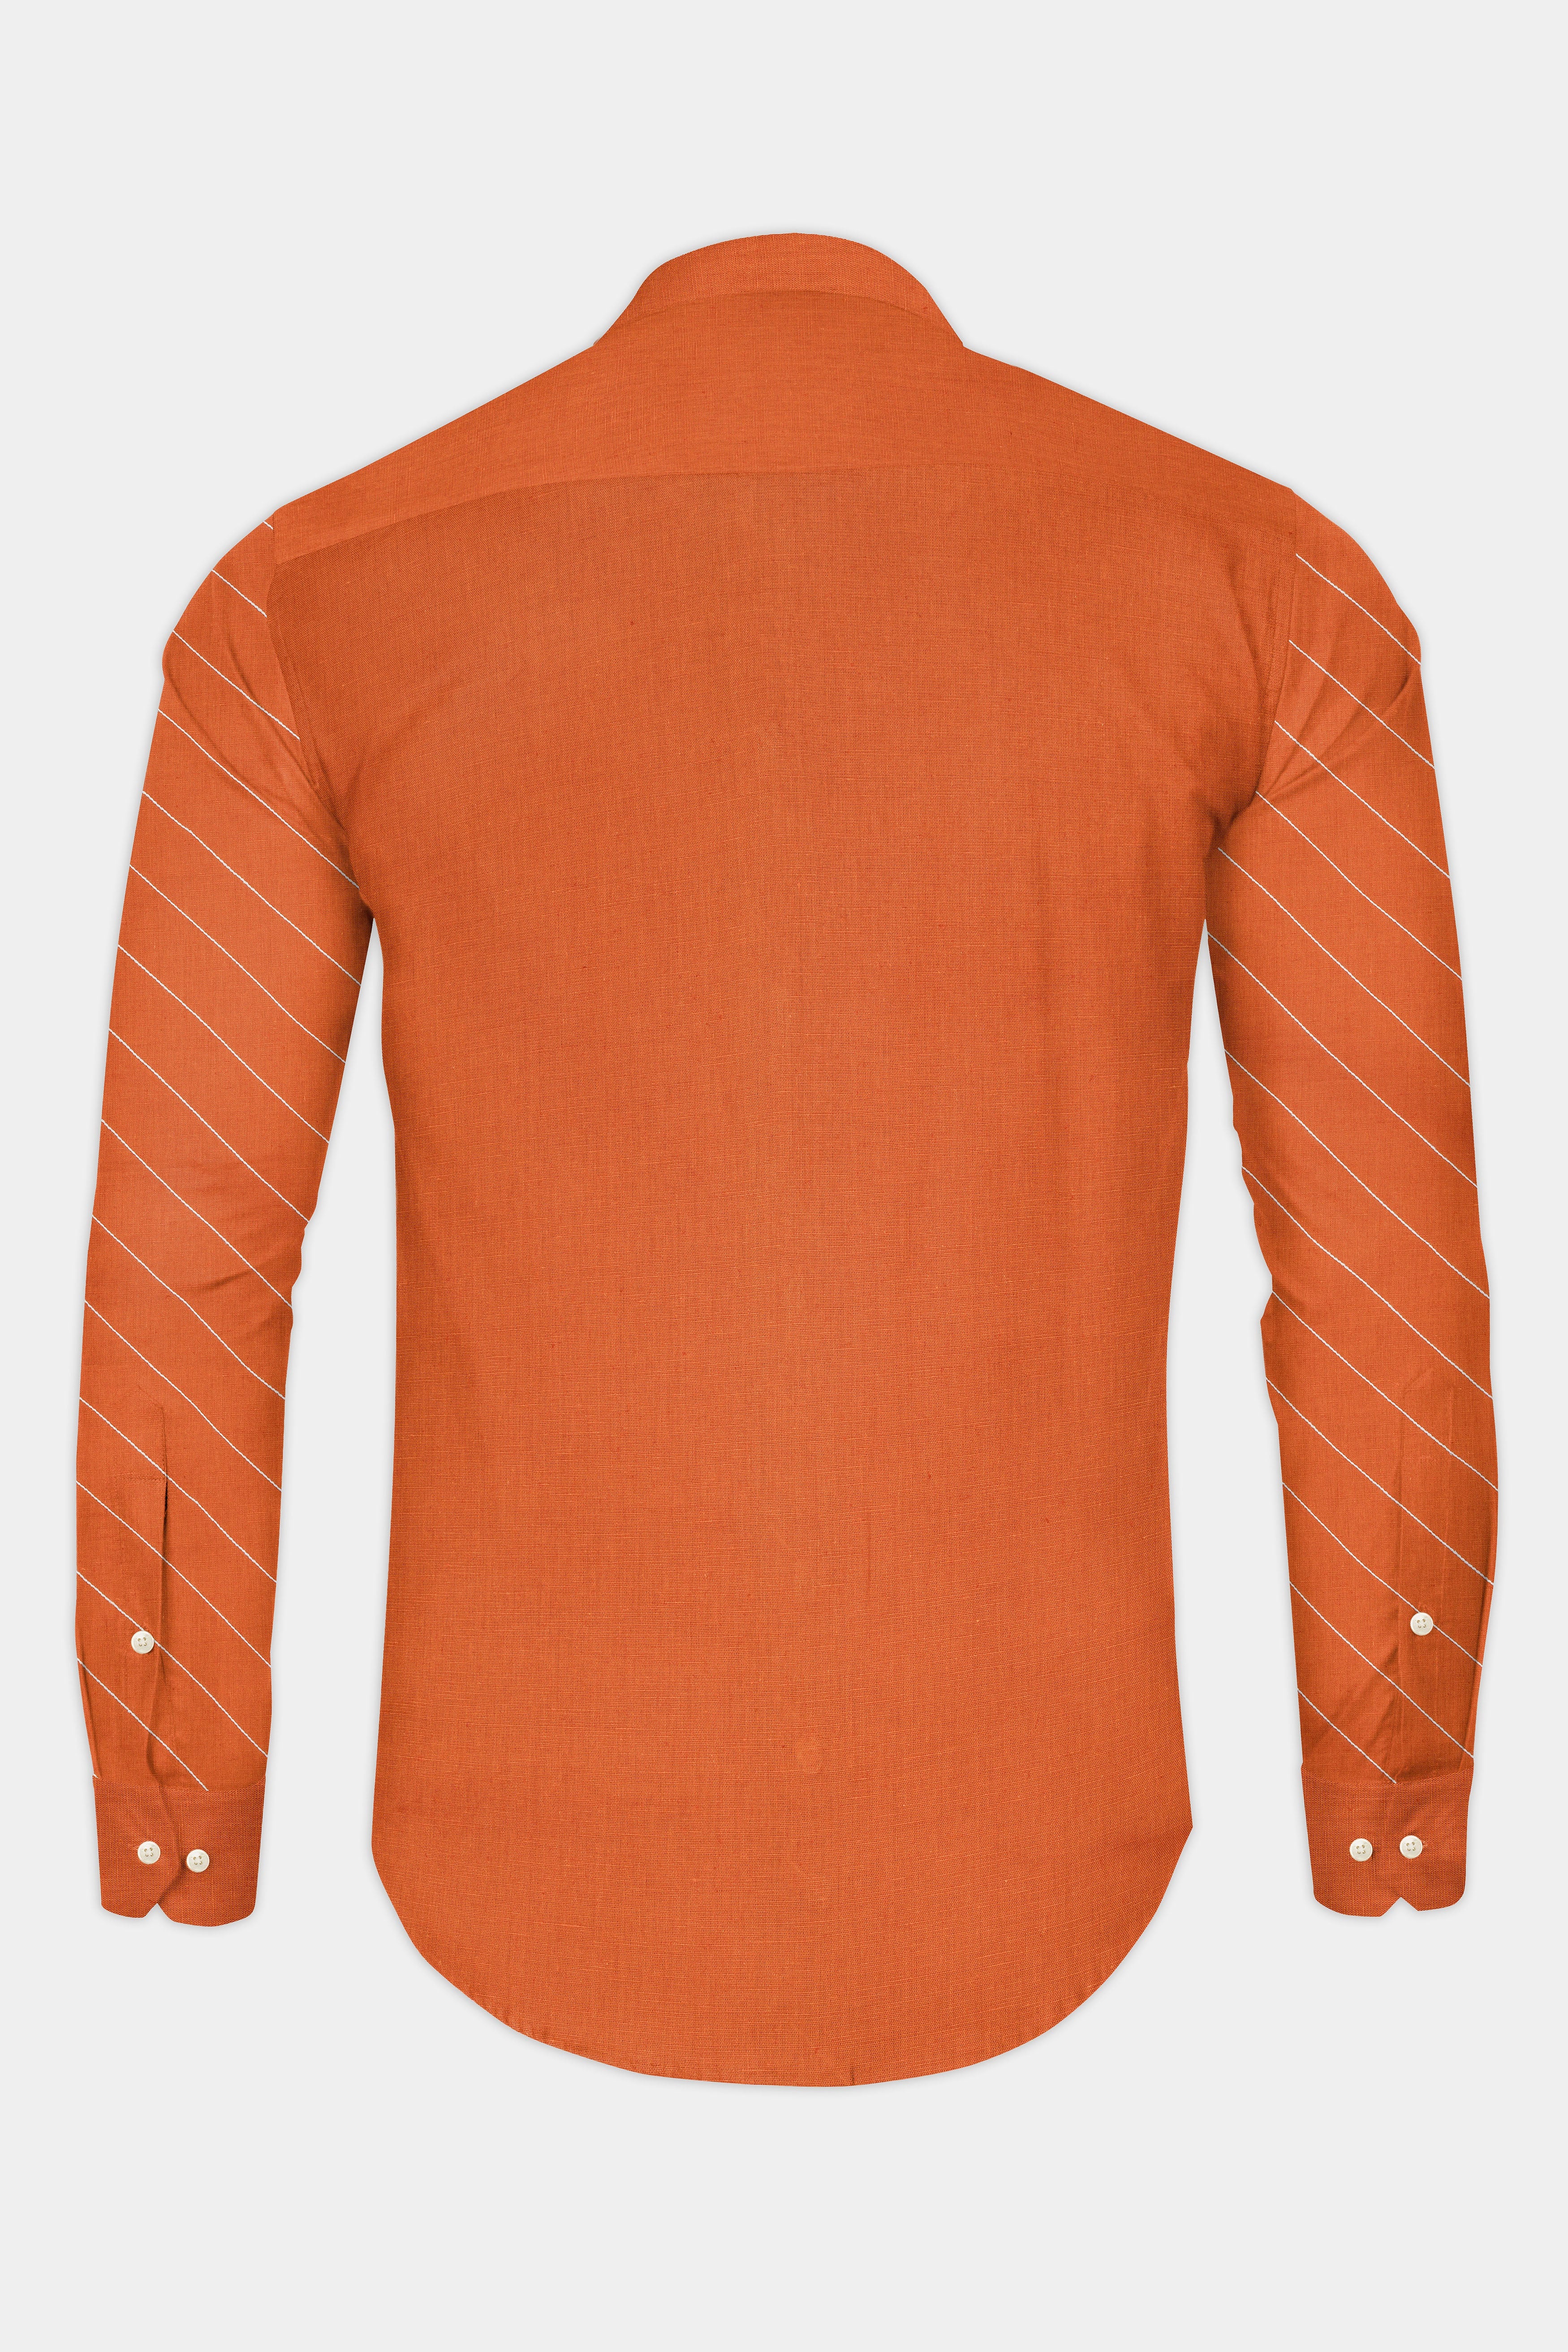 Sunrise Orange Cross Striped Luxurious Linen Shirt